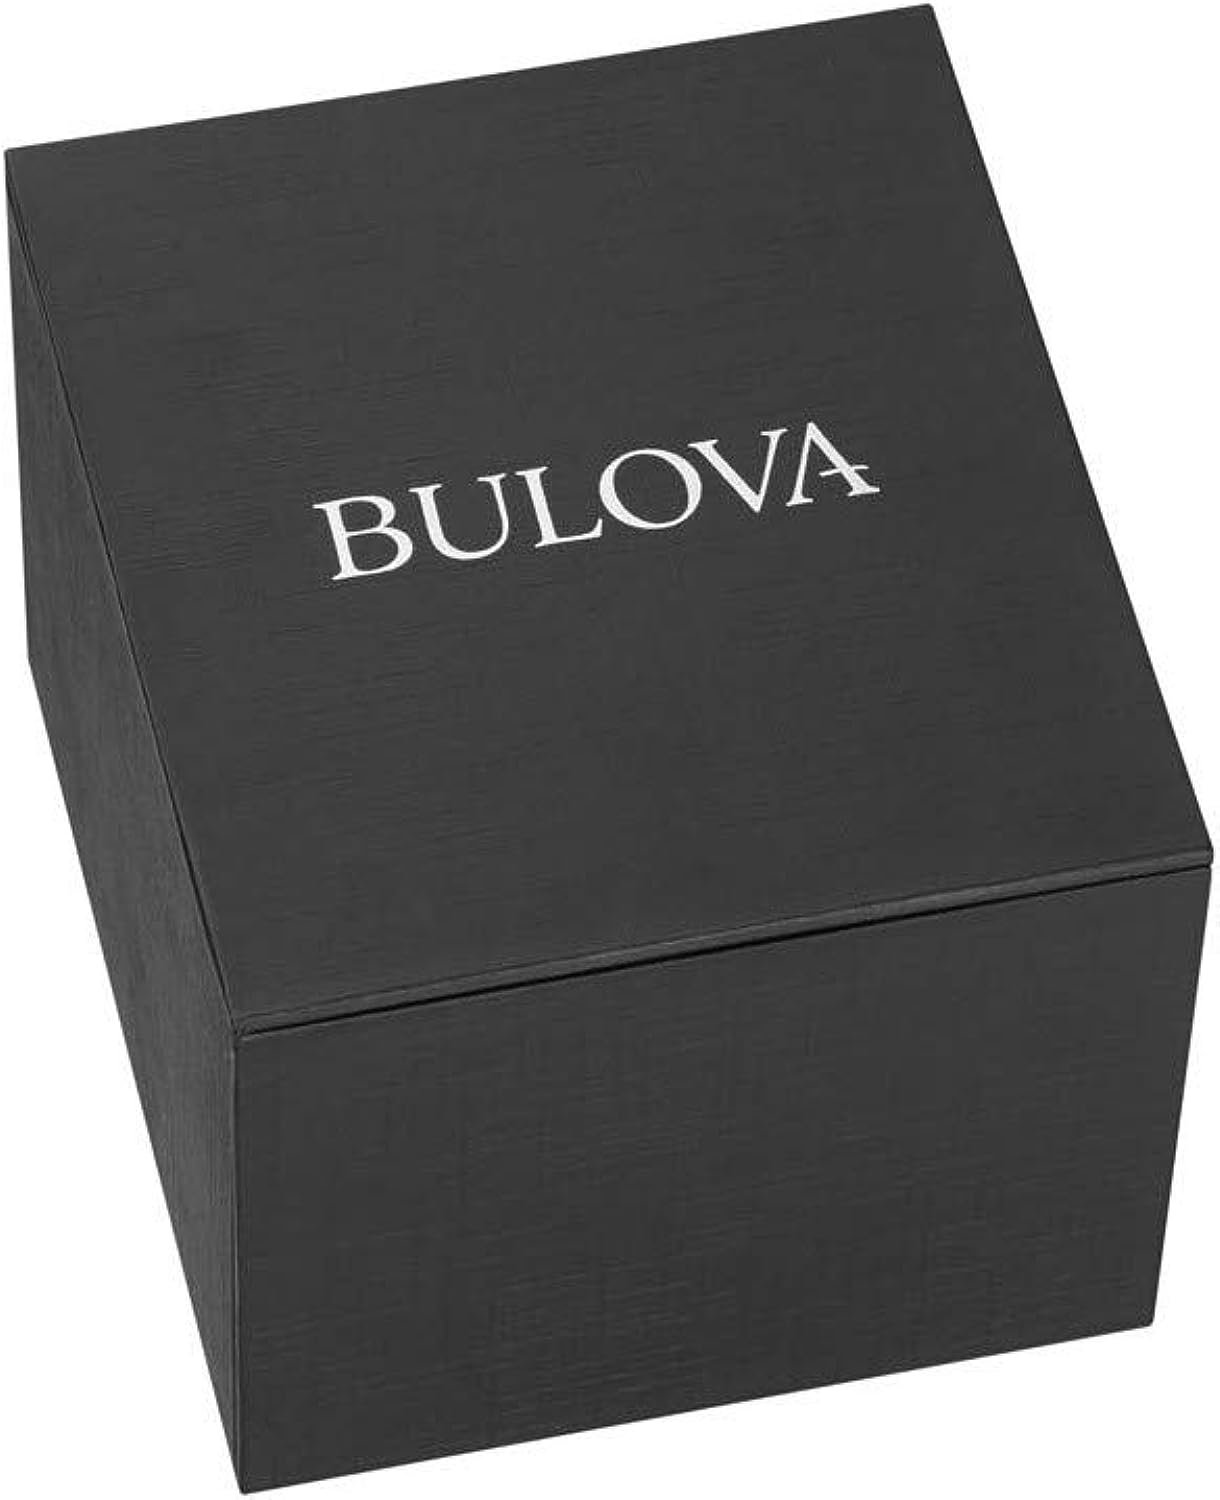 Bulova Mens 3-Hand Quartz Watch with Diamond Dial and Edge to Edge Crystal